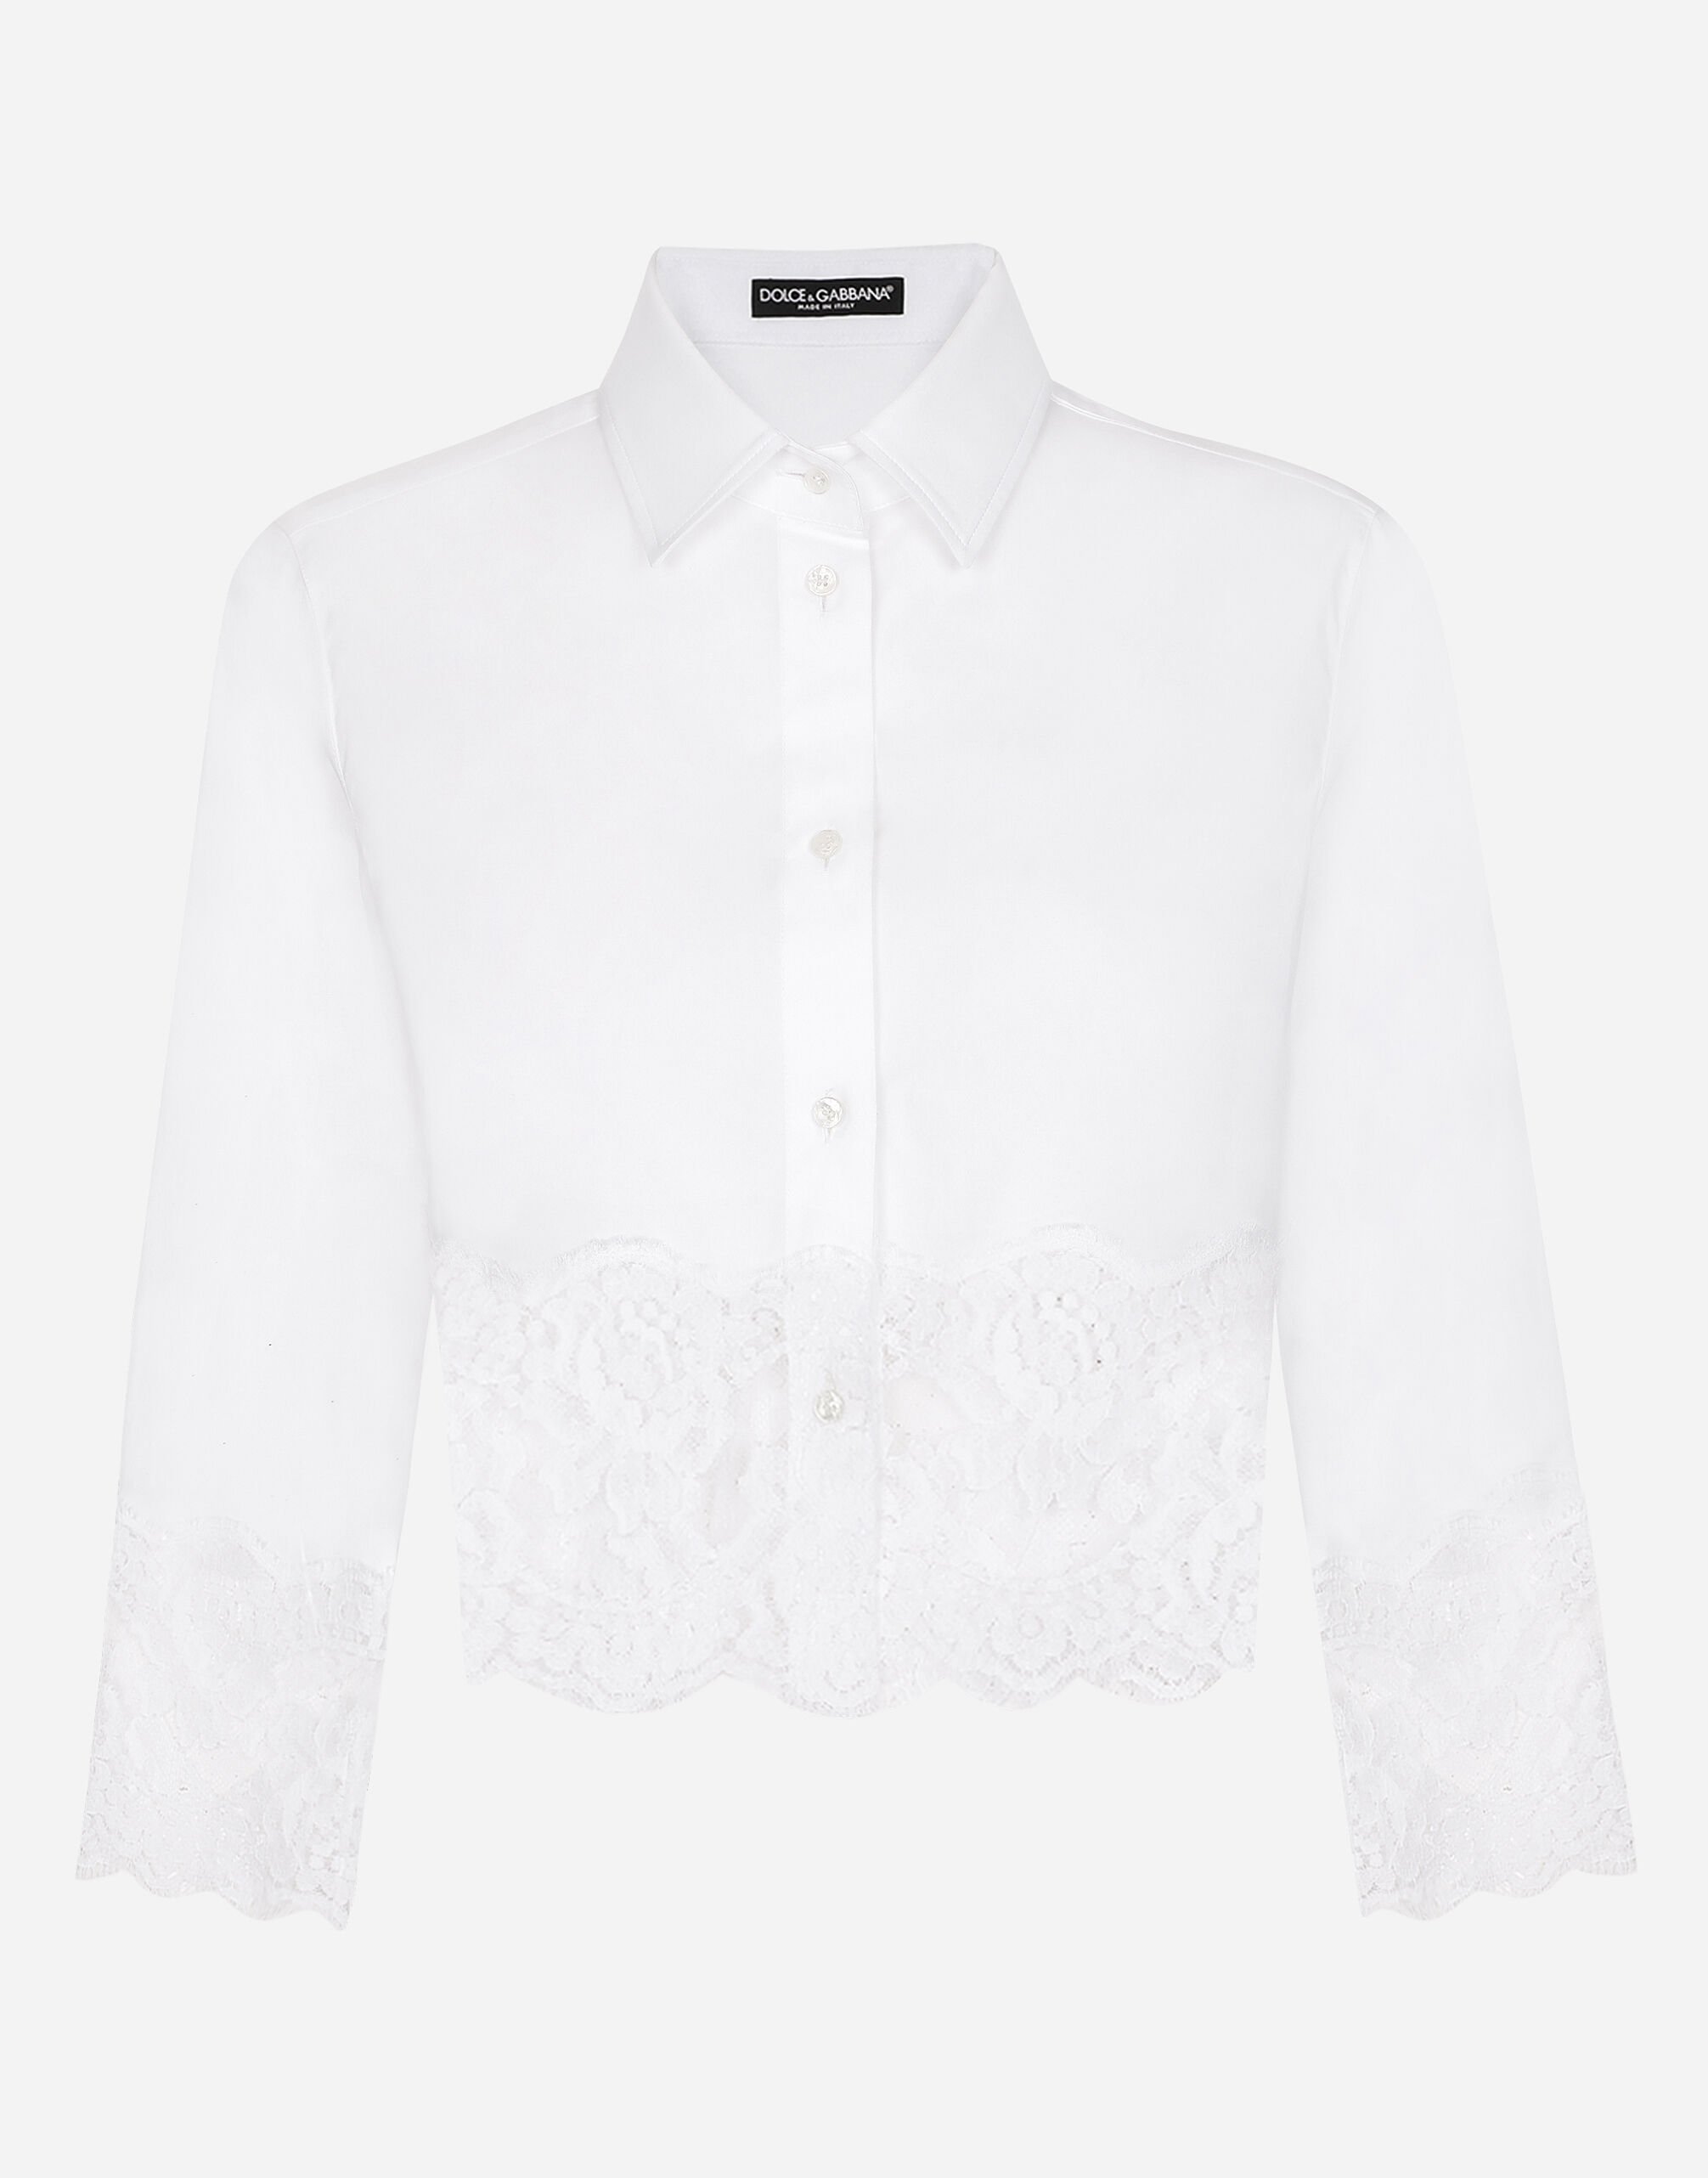 Dolce & Gabbana قميص بوبلين كروب بتطعيمات دانتيل أبيض F5P62TGDB8O